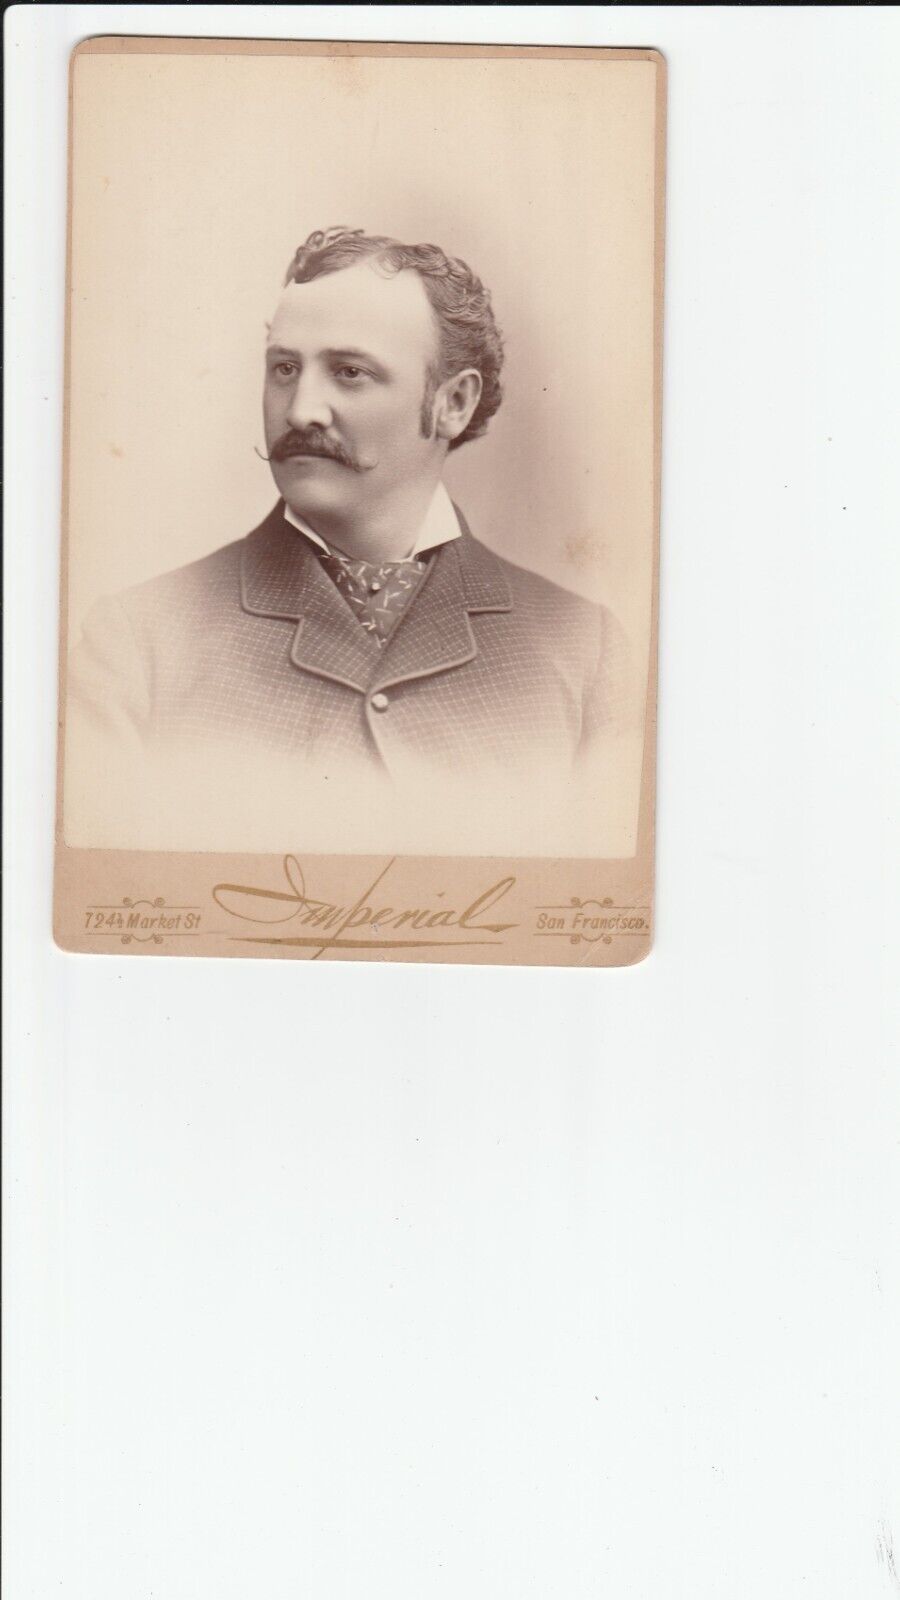 CABINET CARD ID 1882 IMPERIAL S.F. CAL, GENTLEMAN HANDLEBAR MUSTACHE,CRAVET TIE